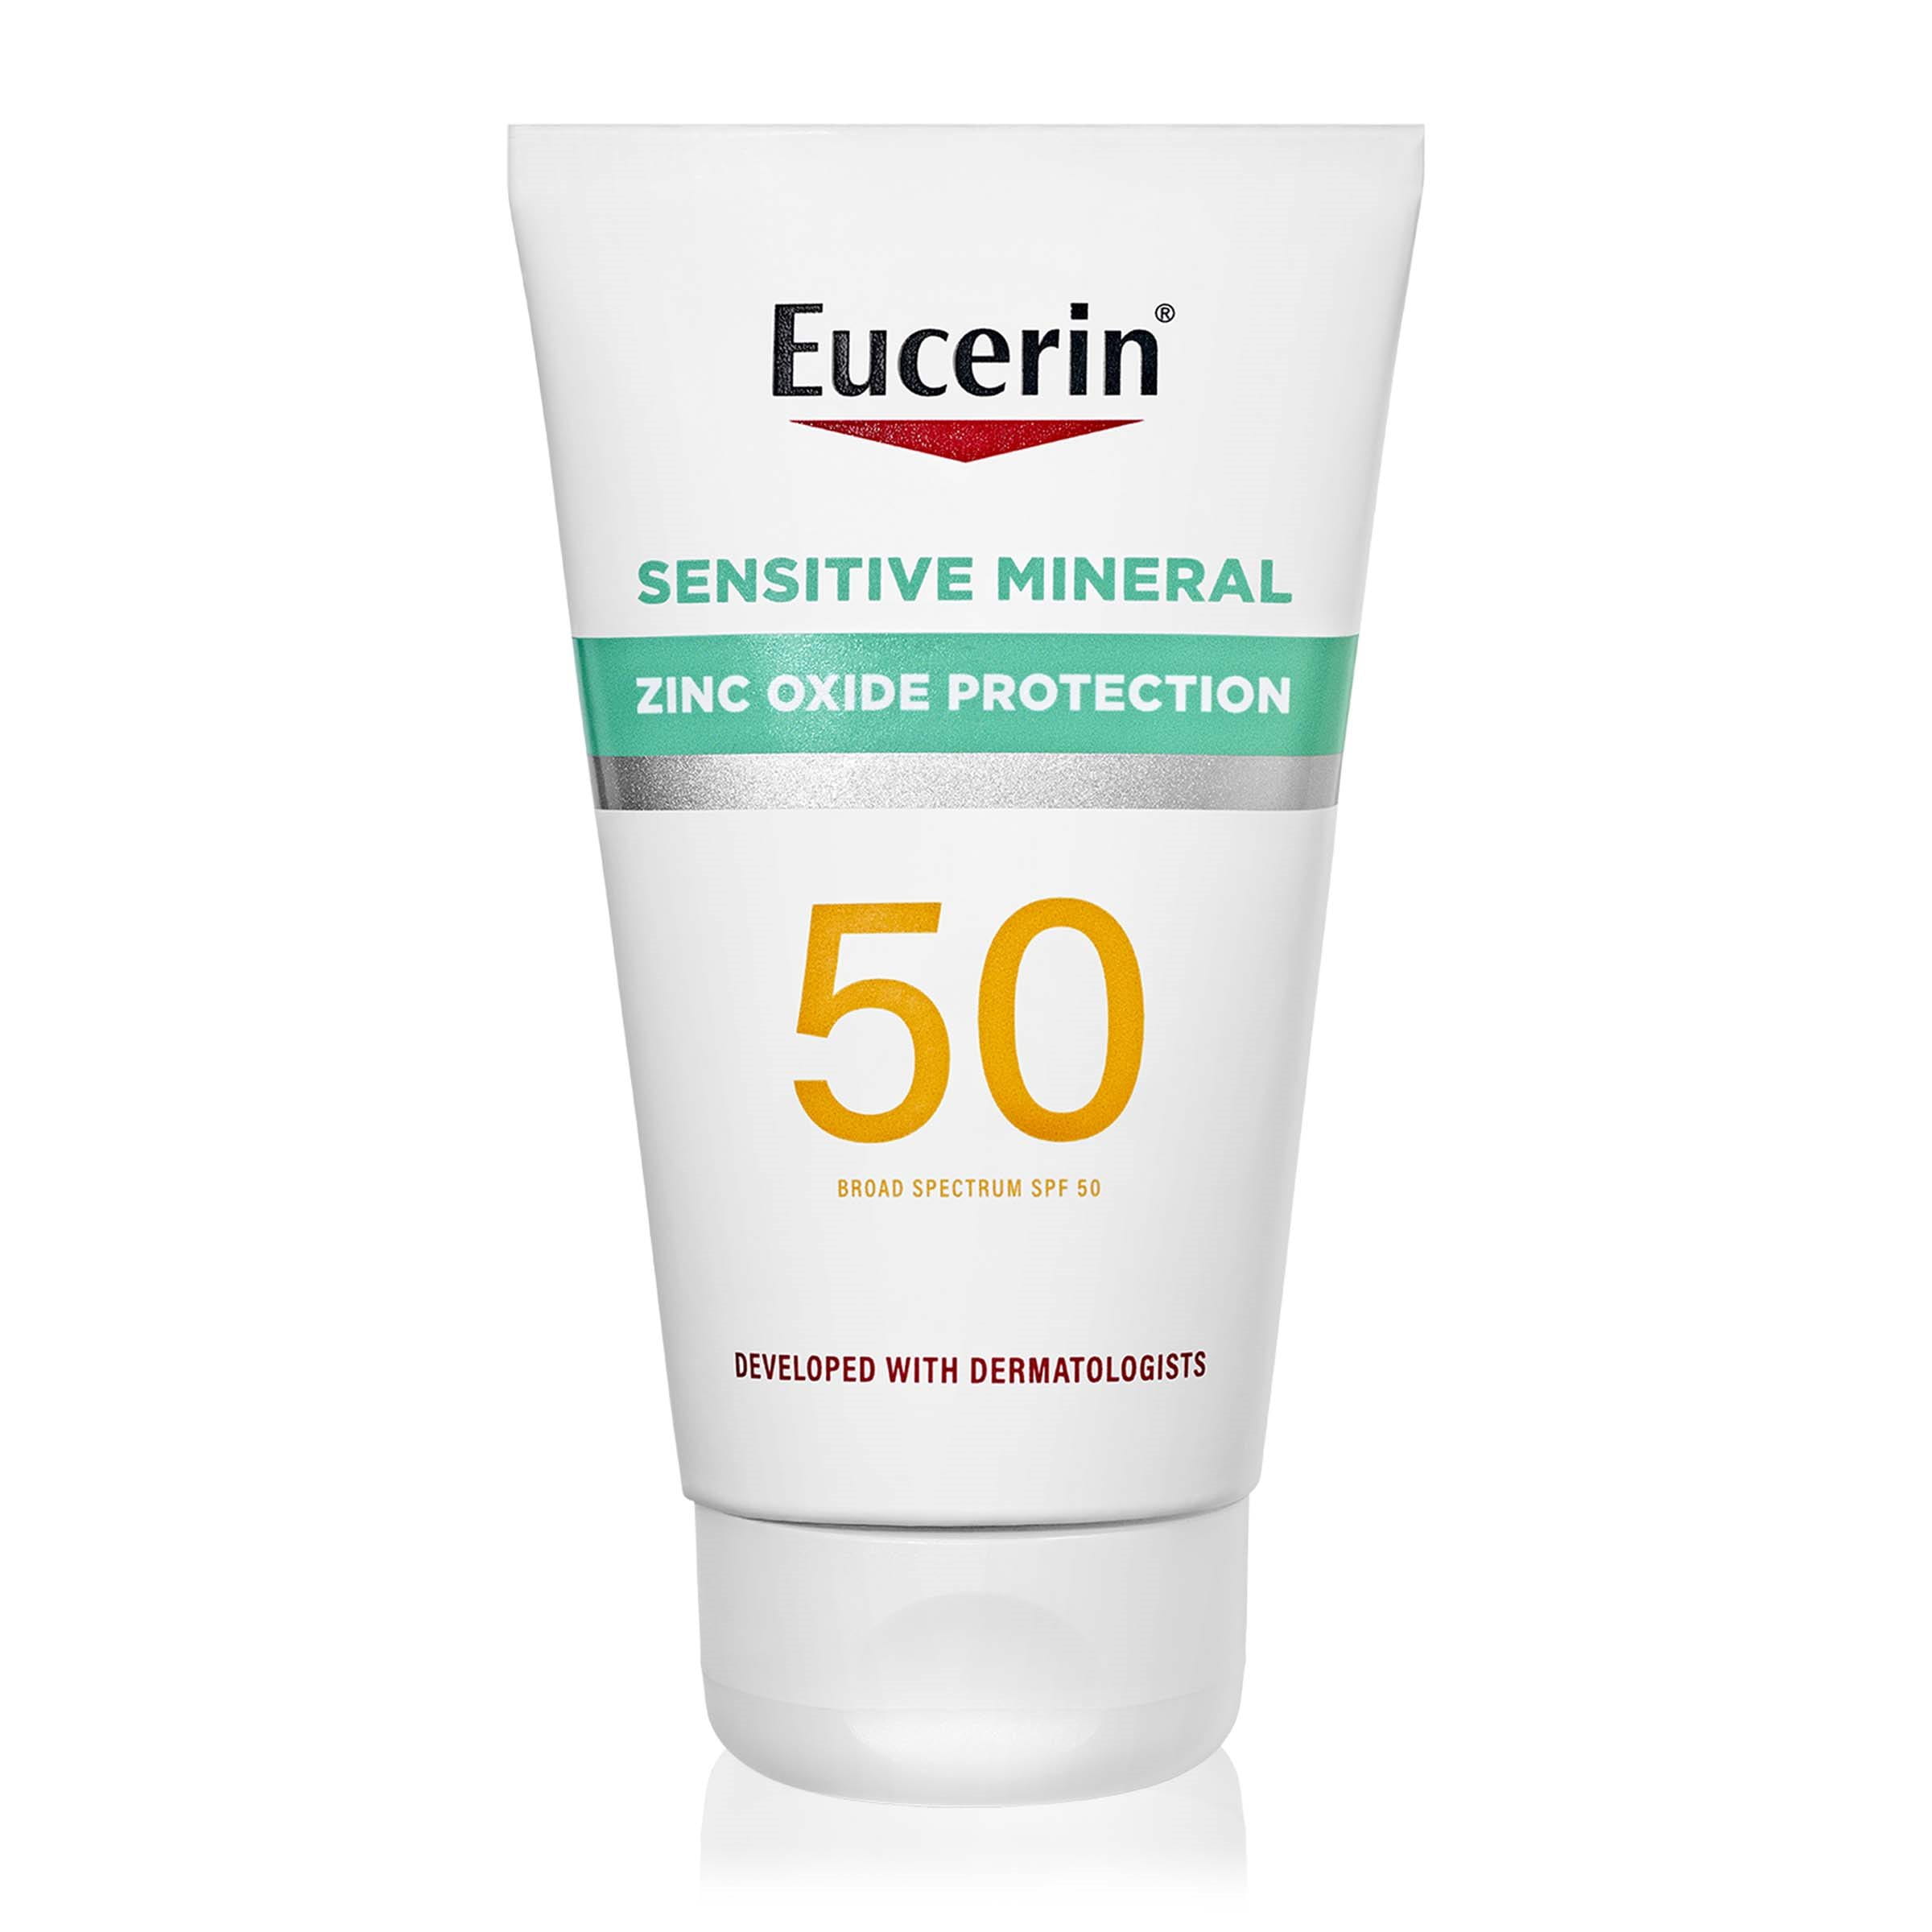 Sensitive Mineral Sunscreen Lotion SPF 50 - Eucerin Sun